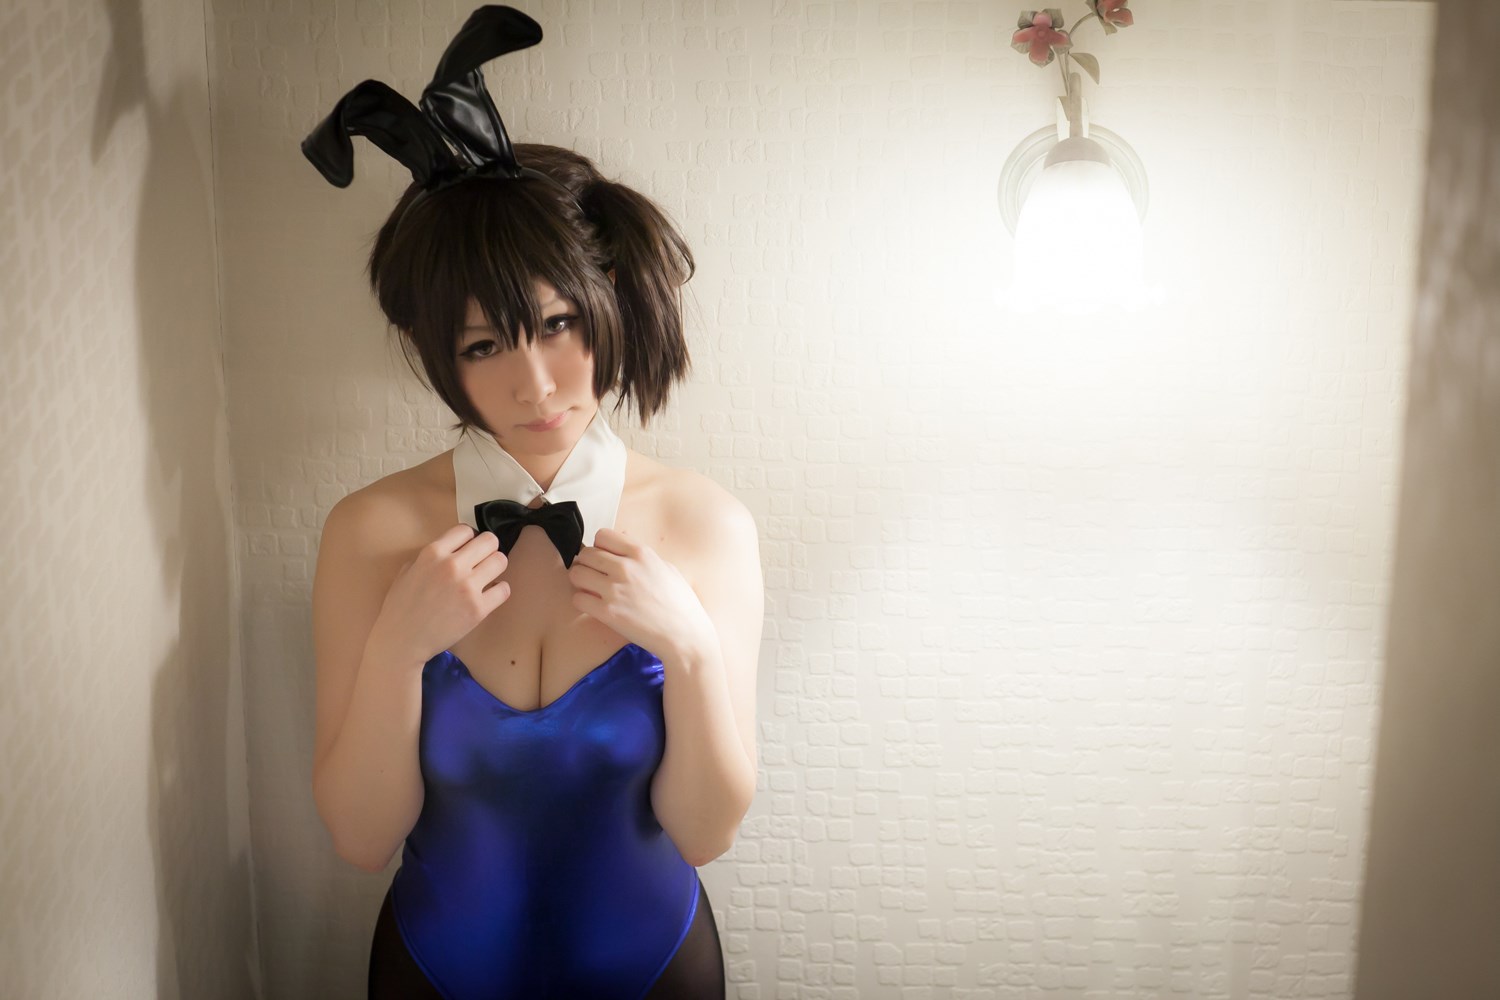 Rabbit suit Kaga animation reality show sexy stockings girl(9)